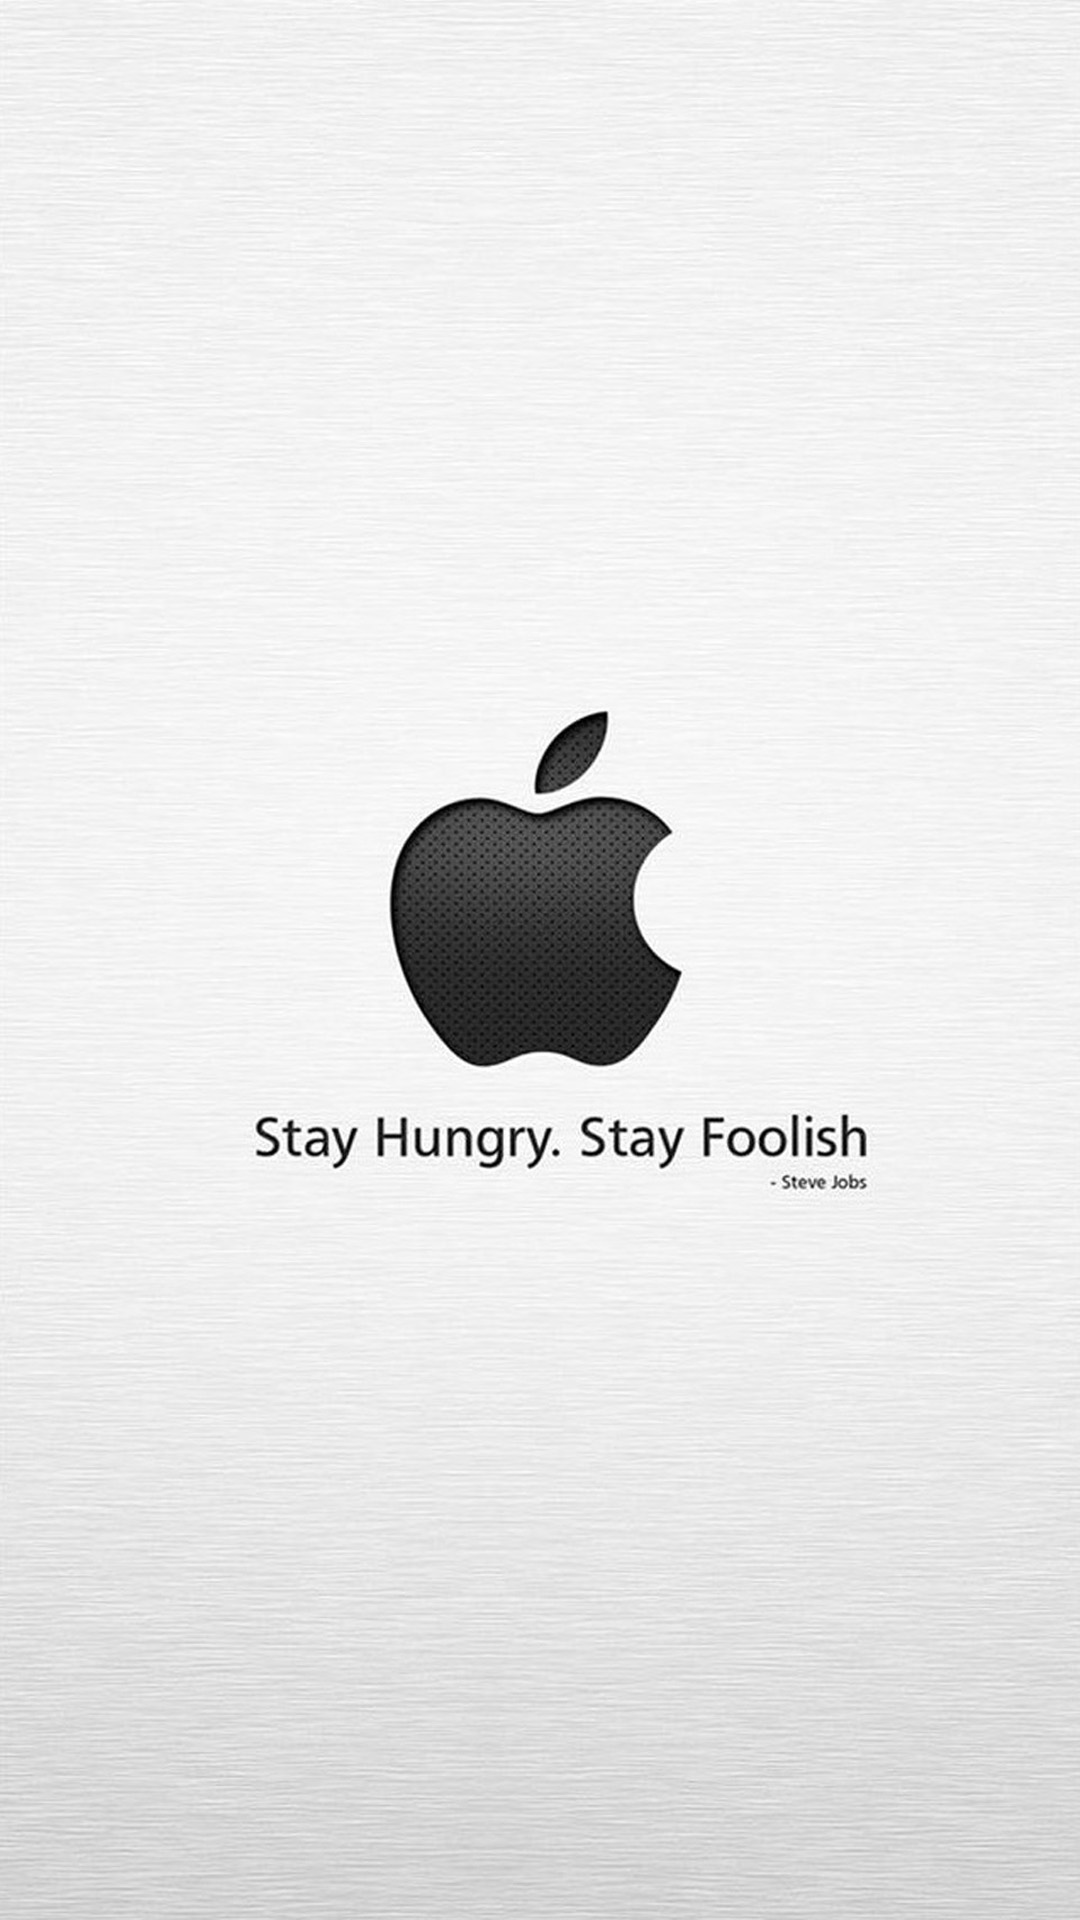 Найти картинку айфона. Эпл. Эмблема айфона. Логотип Эппл. Обои Apple.